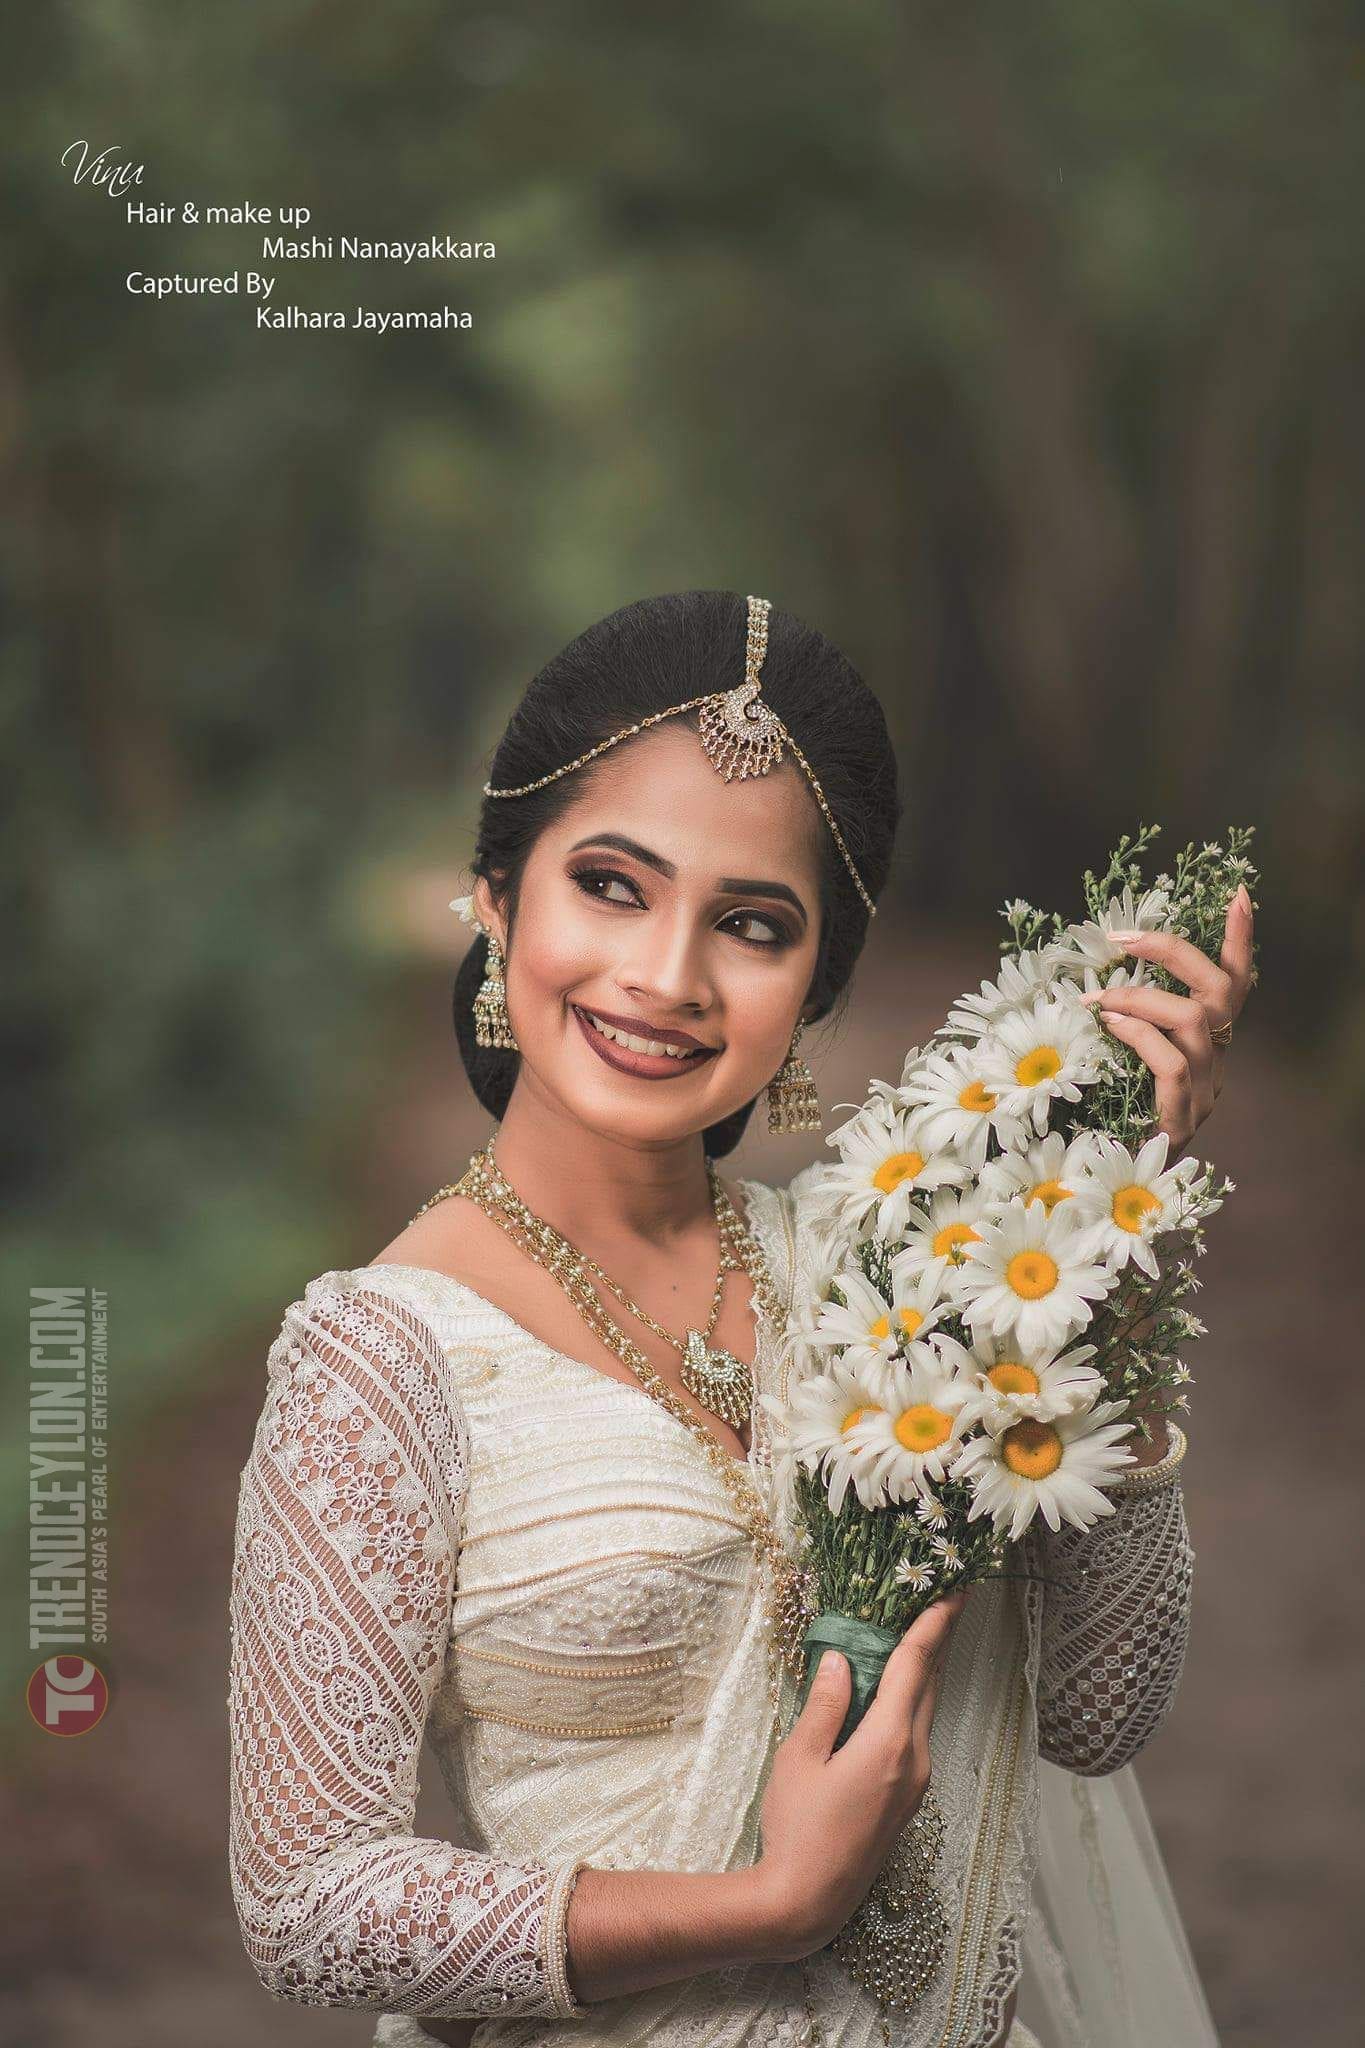 Sri Lankan Actress Vinu Perera looks elegant in Kandyan bridal saree